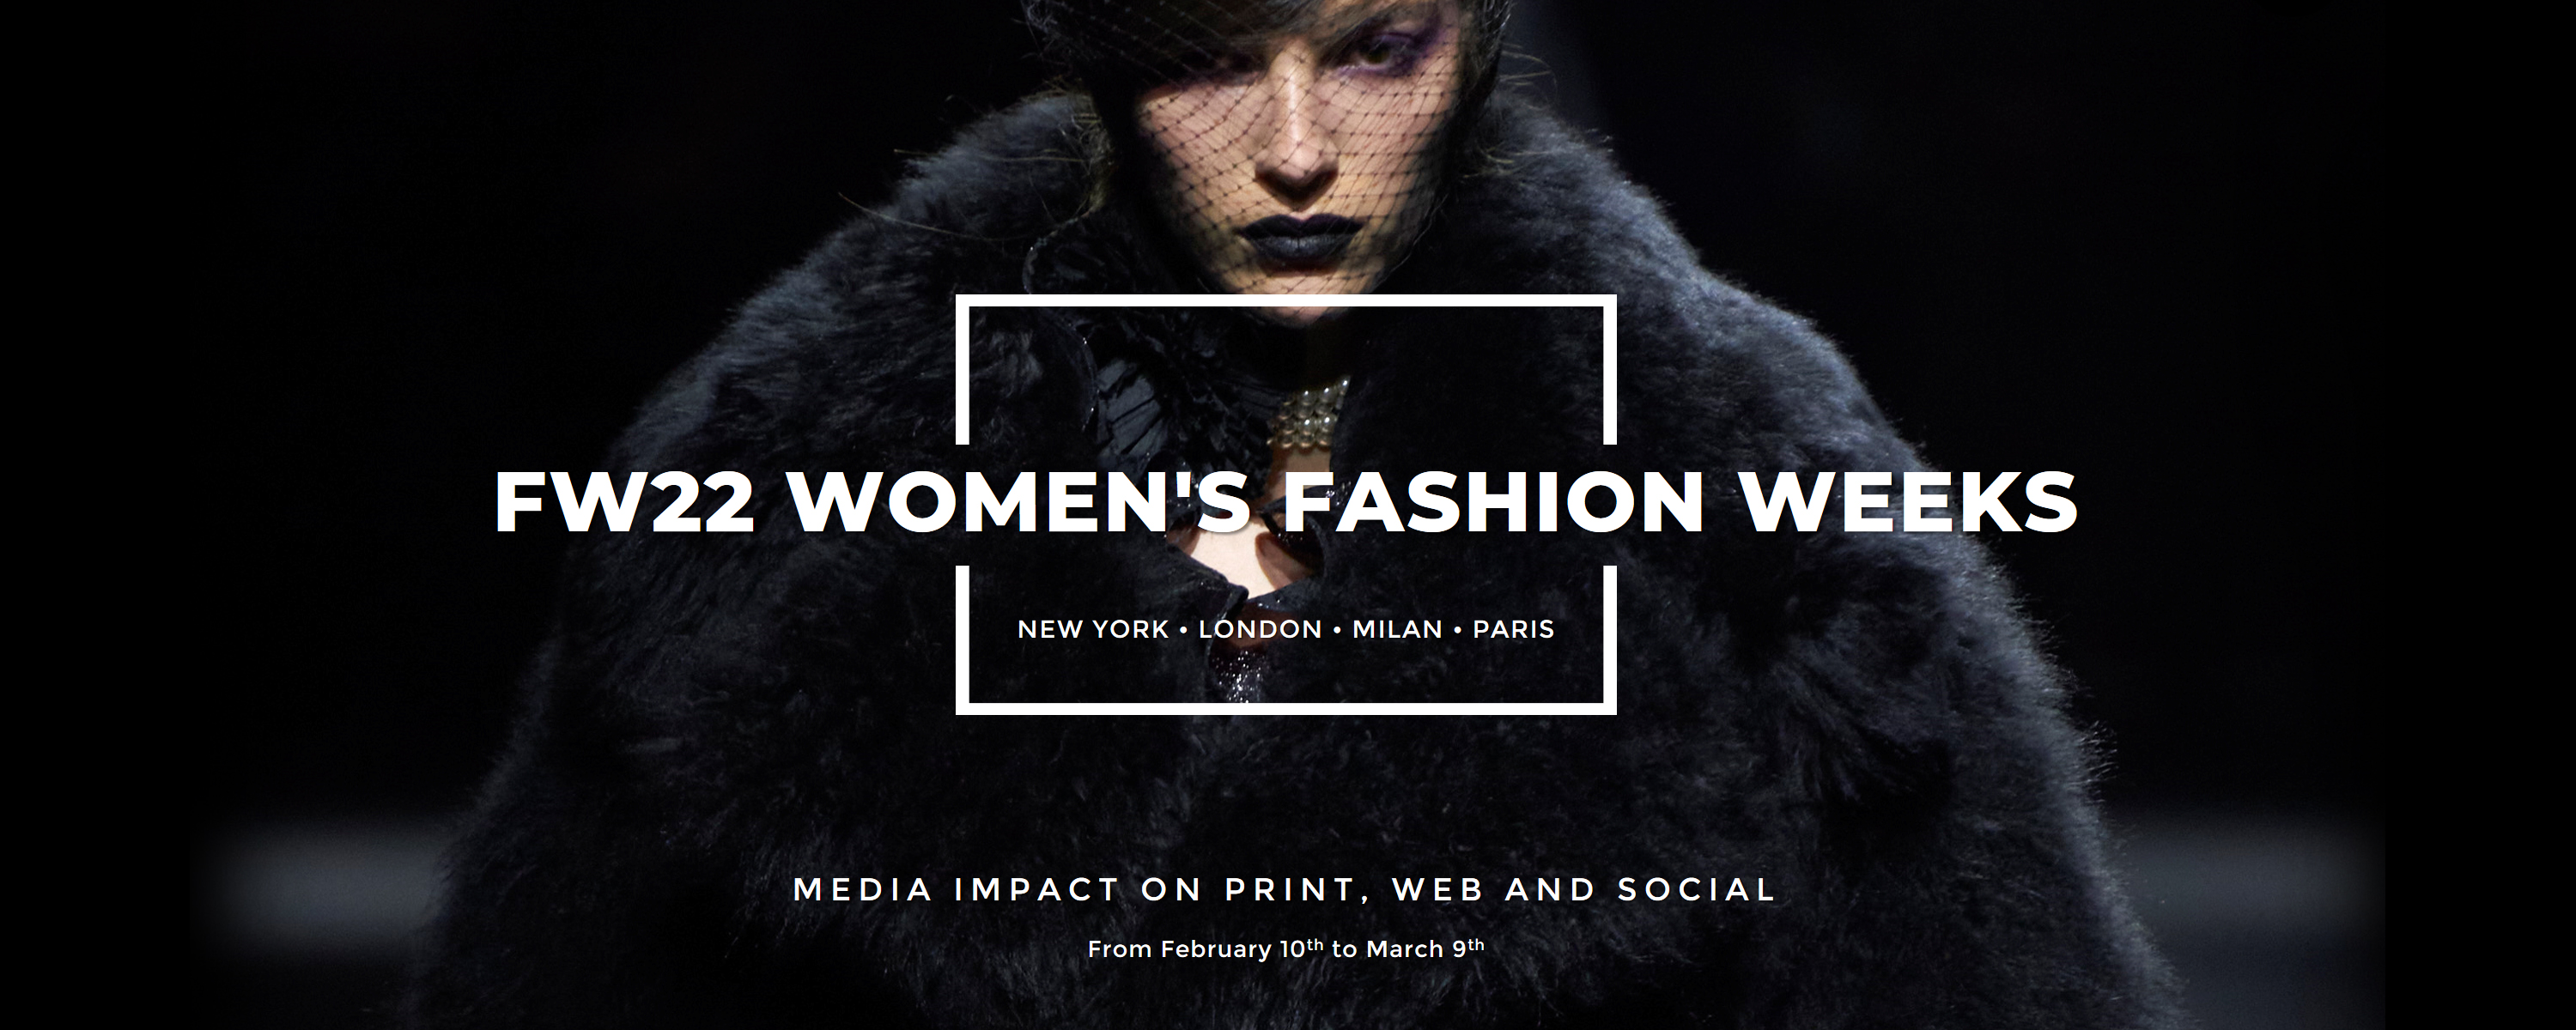 FW22 Women's Fashion Week